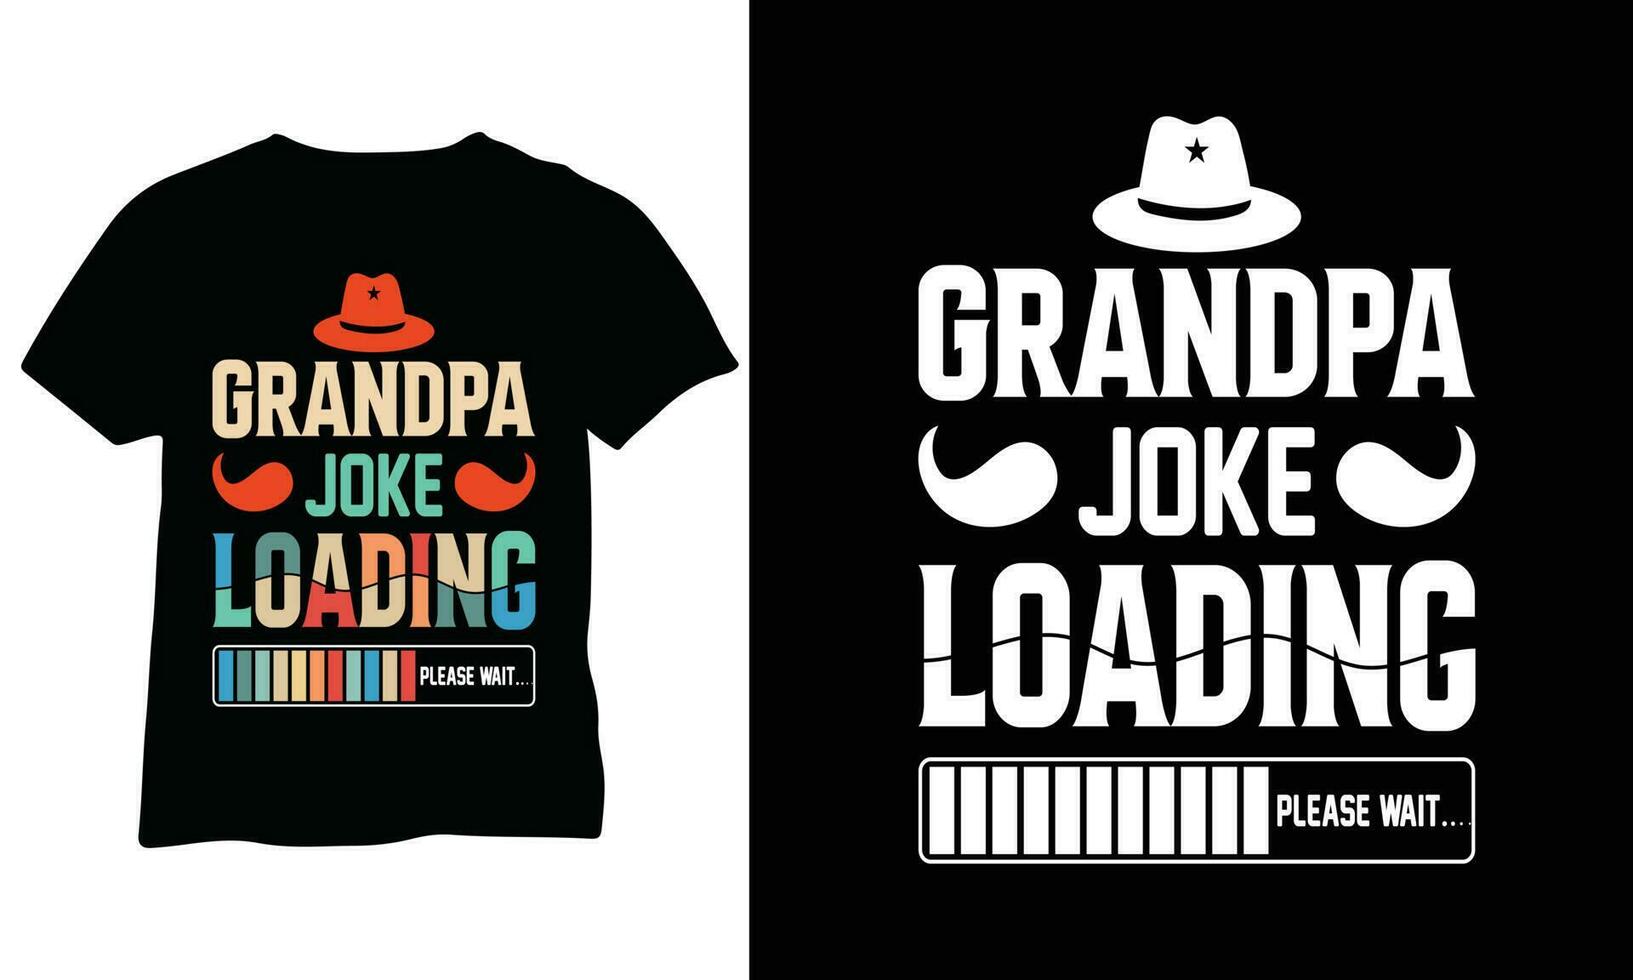 opa grap bezig met laden overhemd opa overhemd papa geschenk grappig opa overhemd vector ontwerp